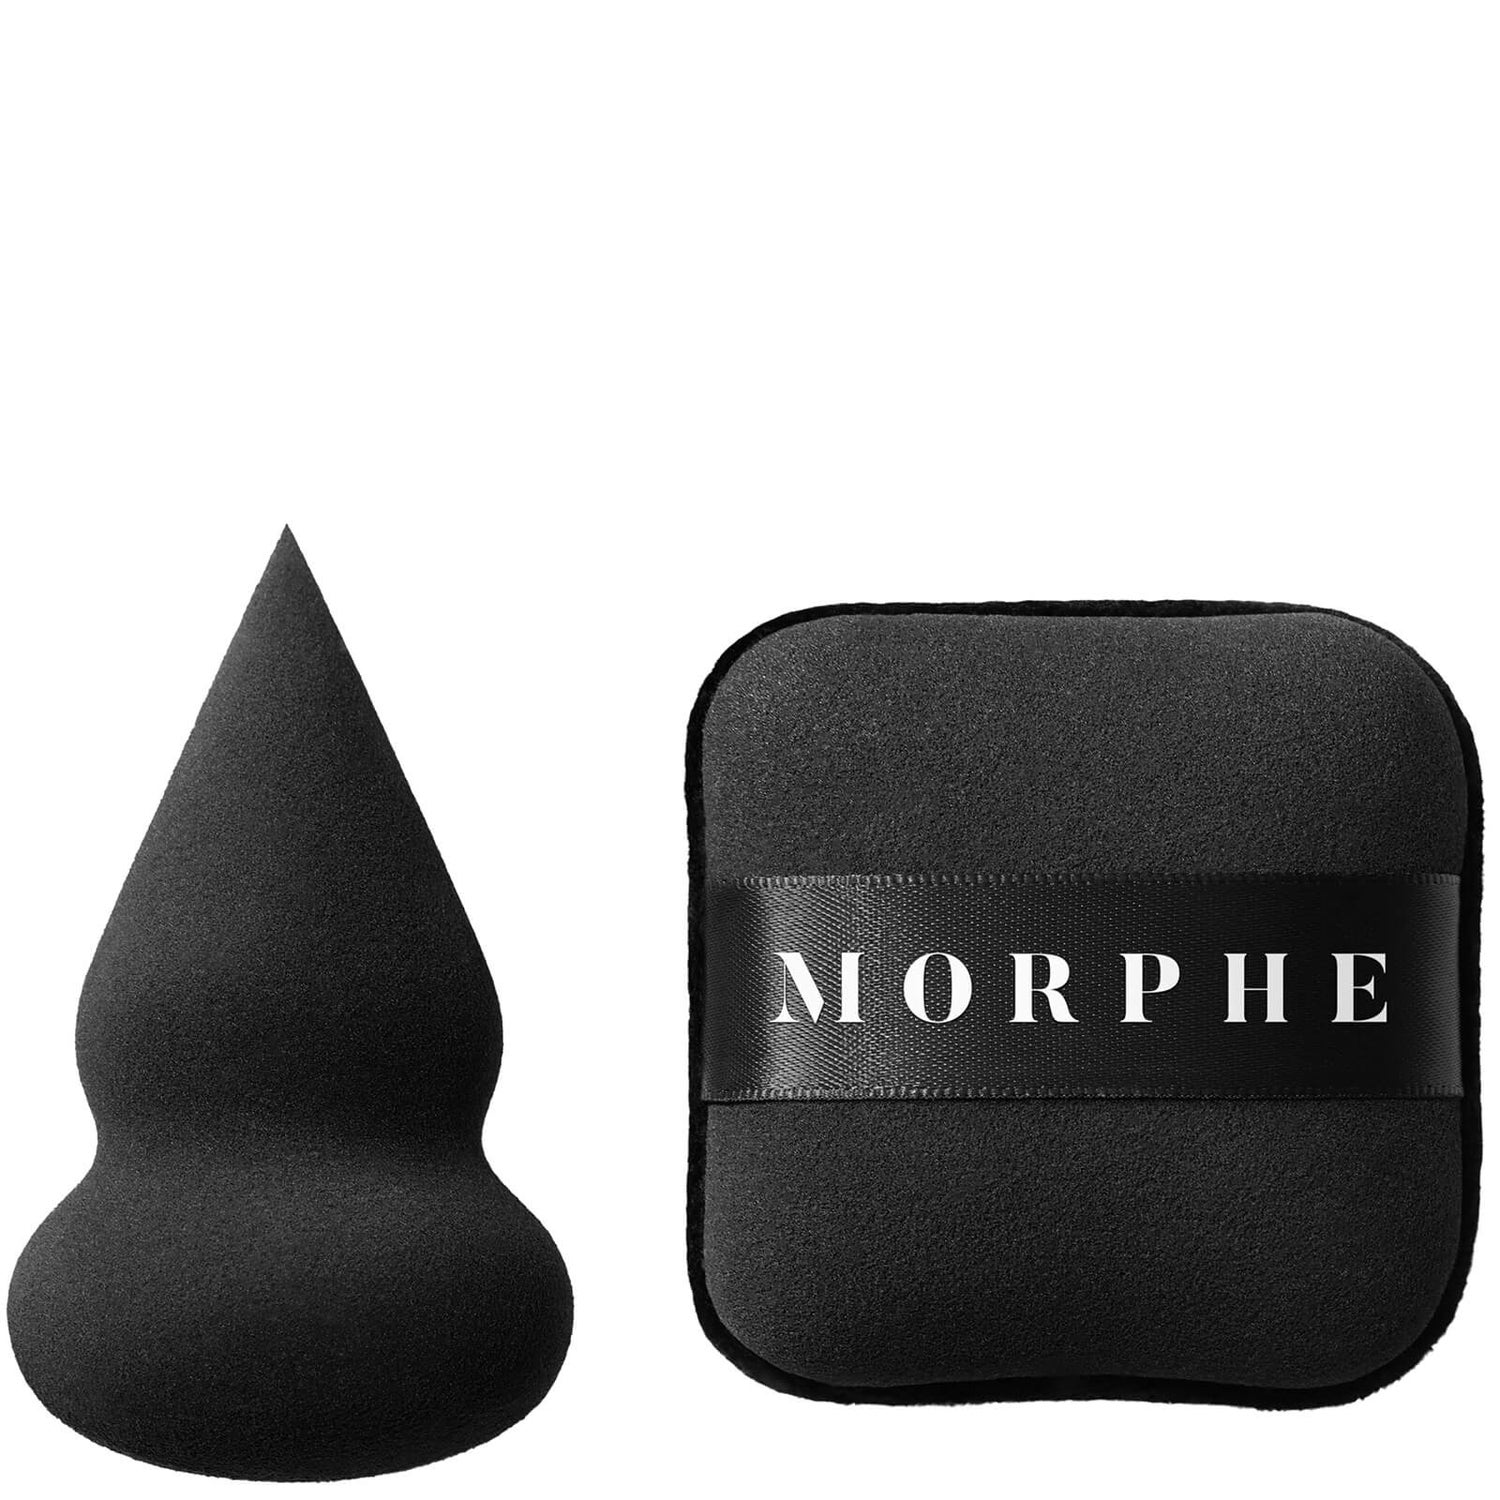 Morphe Vegan Pro Series Beauty Sponge and Powder Puff Duo